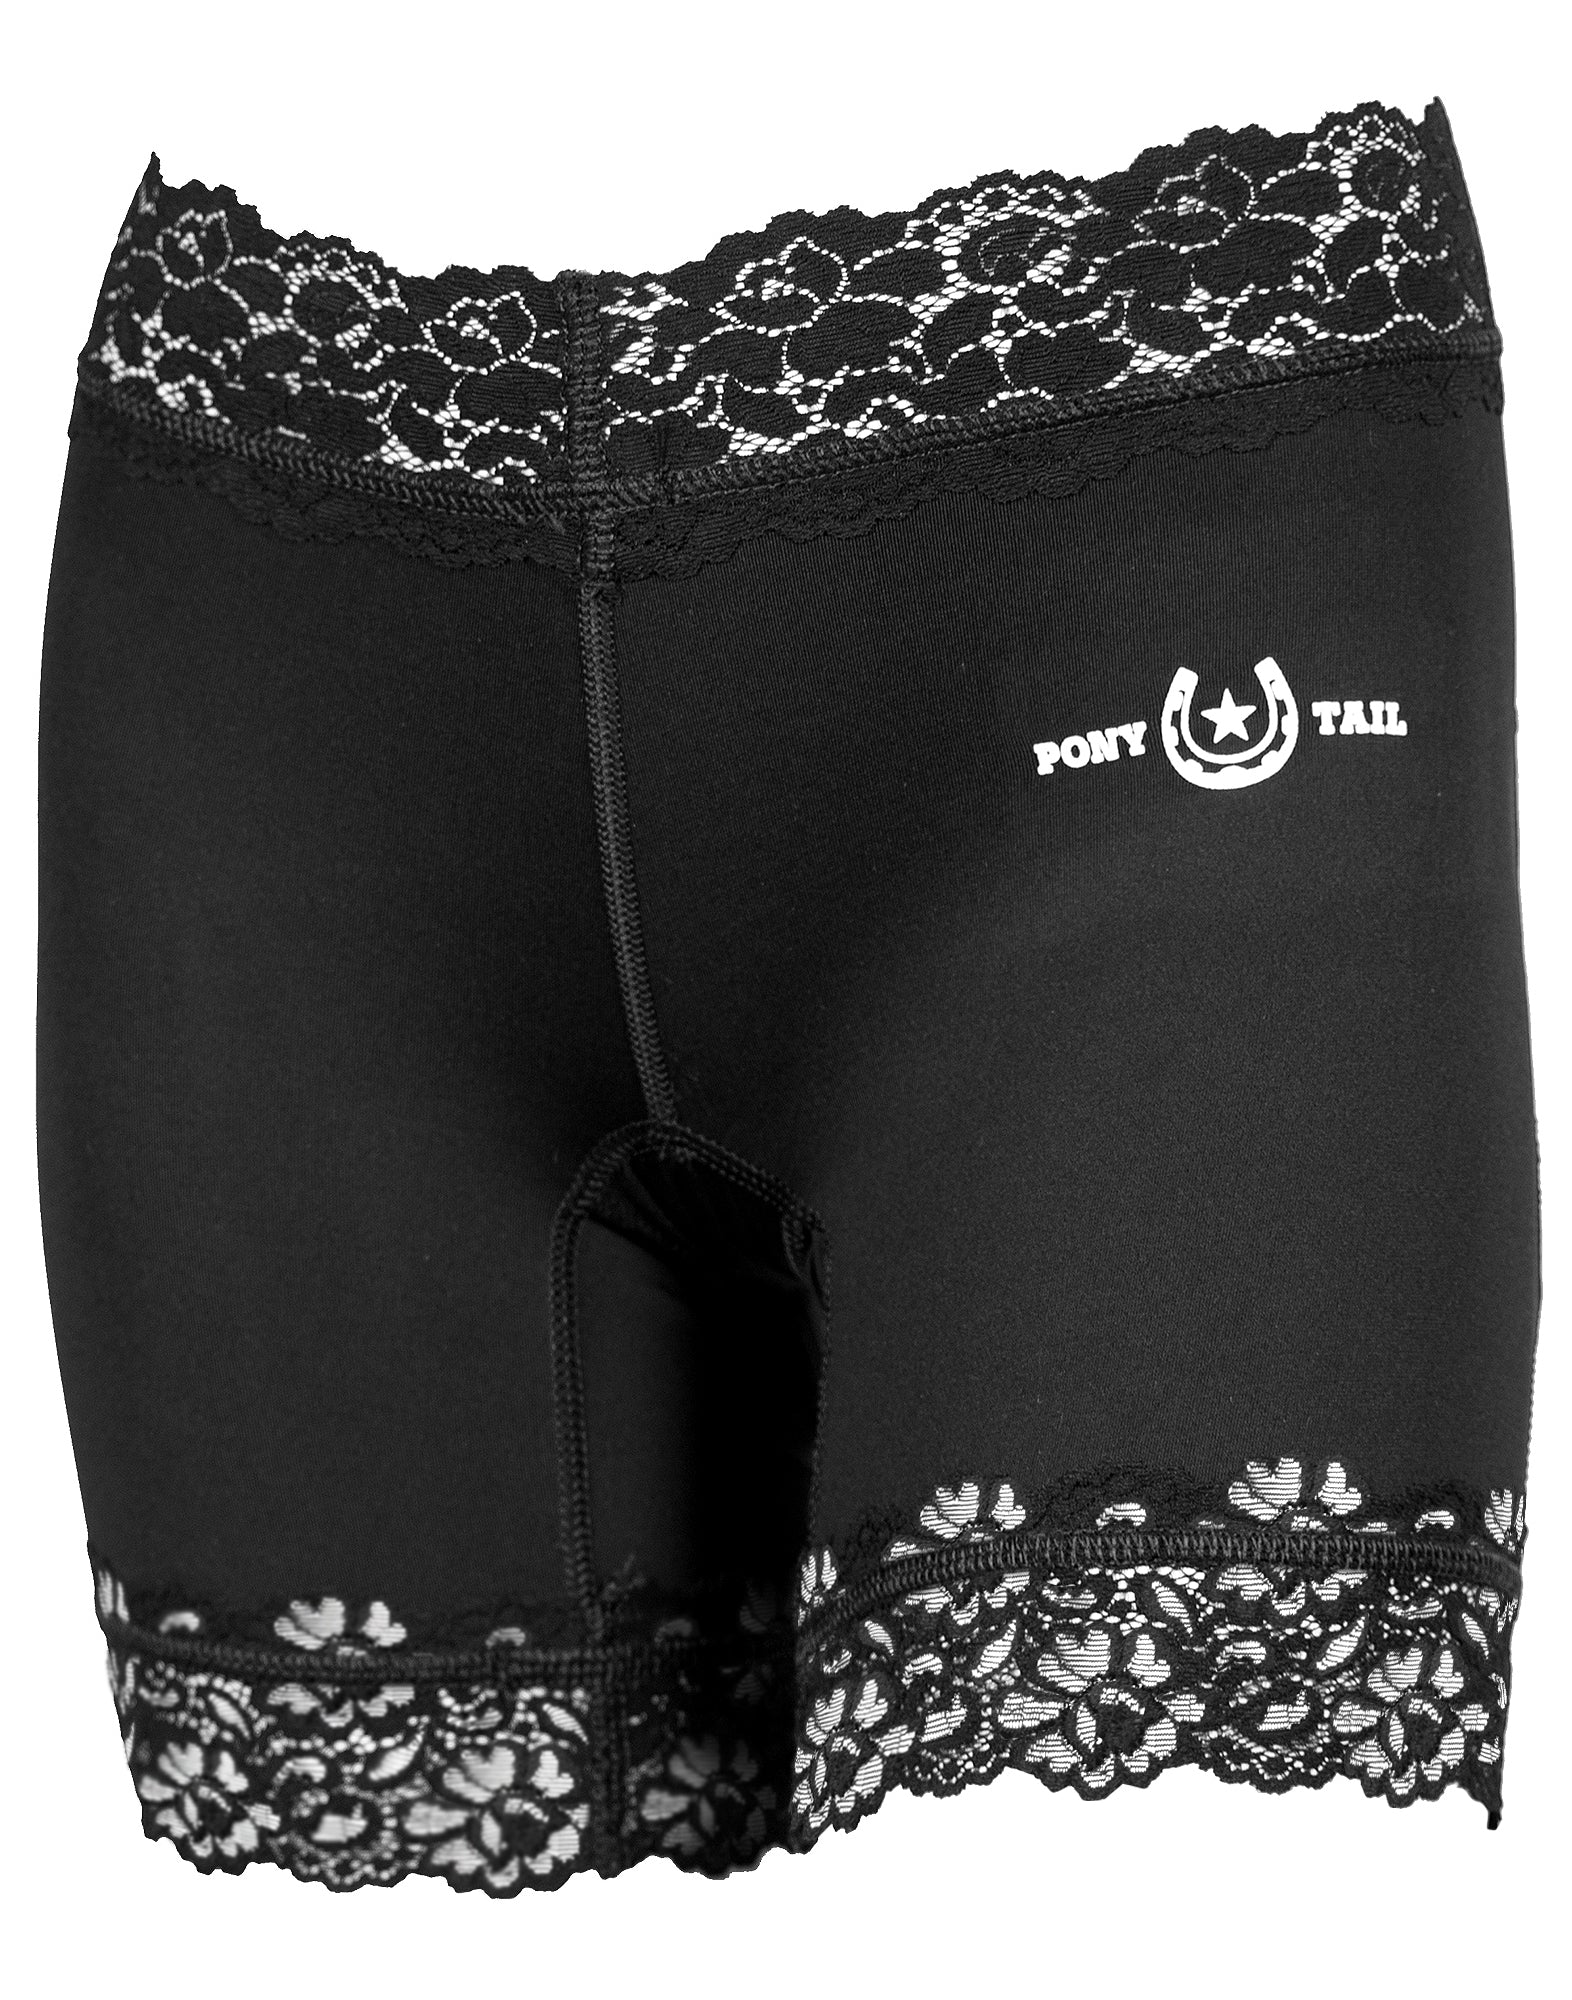 Women’s AIP™ Sport Underwear by Pony Tail Sportswear - Magnolia Lace